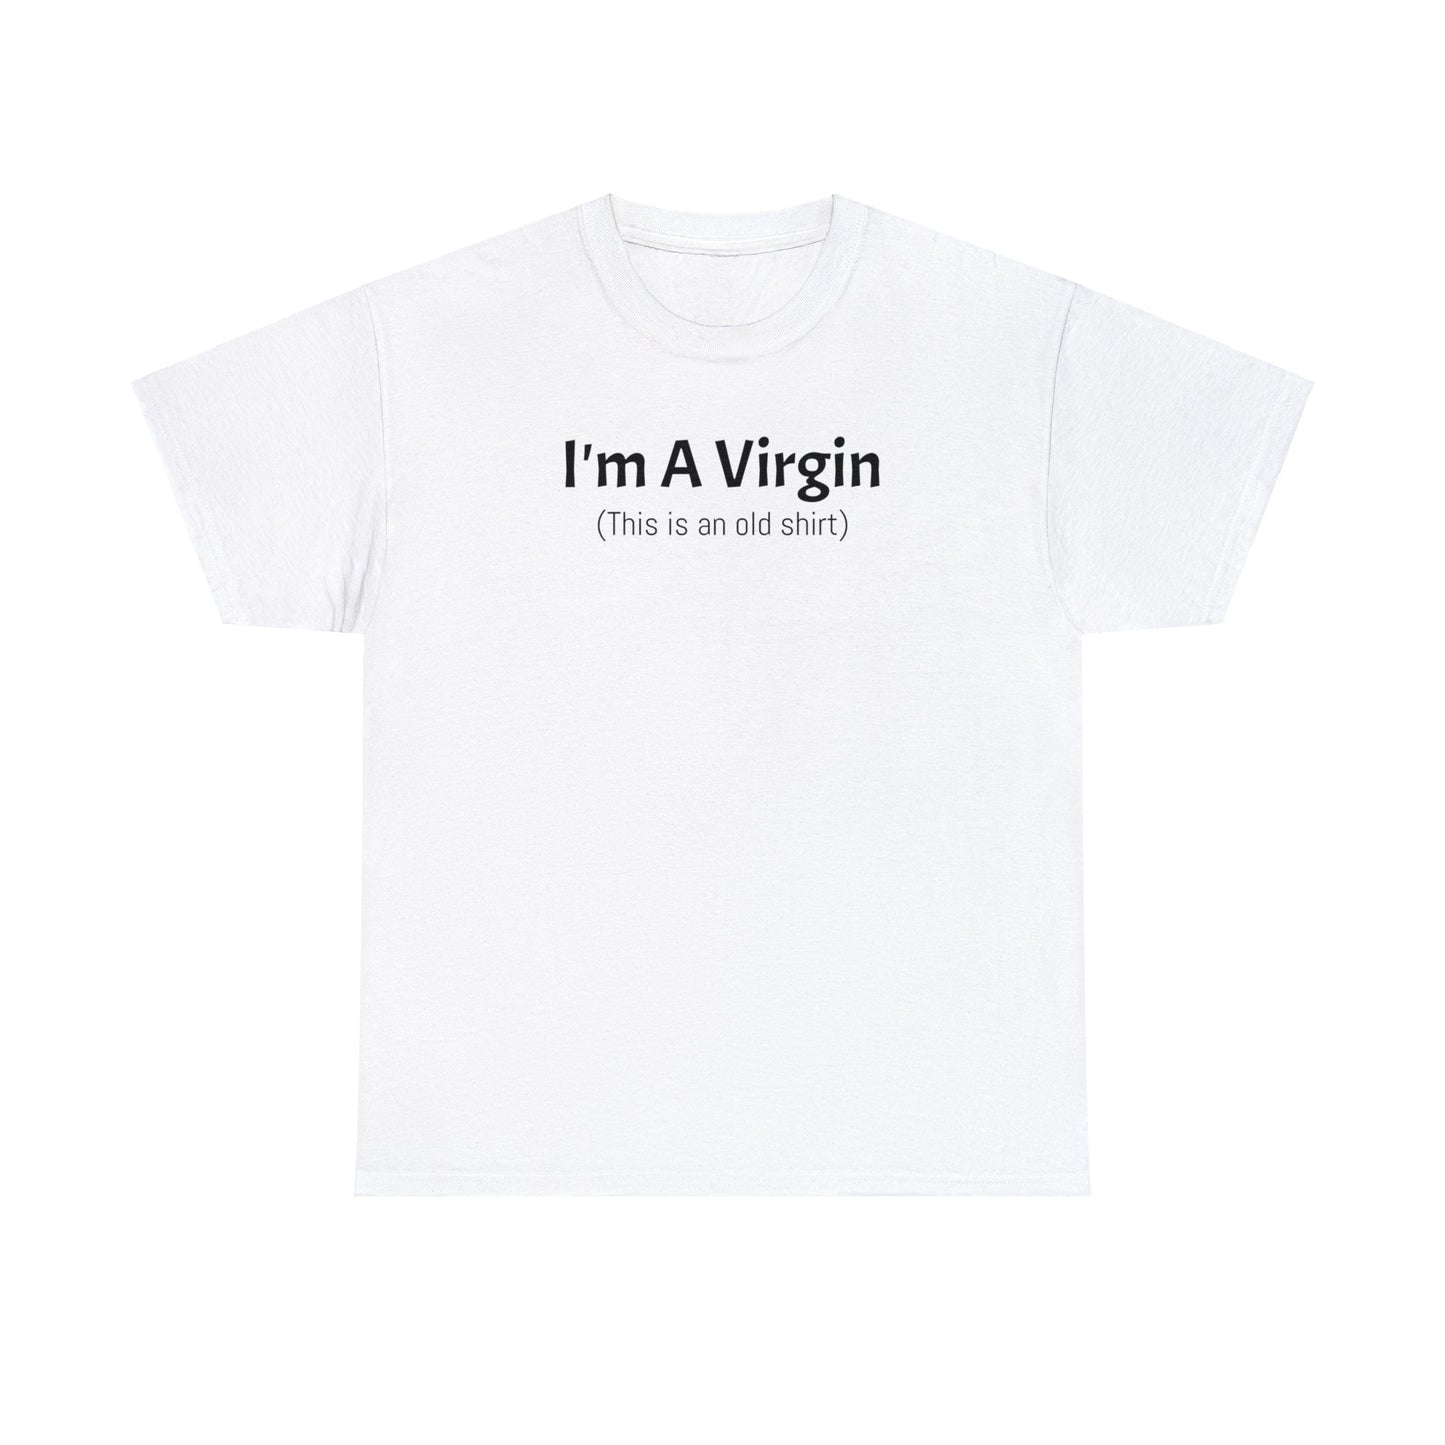 "I'm a Virgin" Tee White